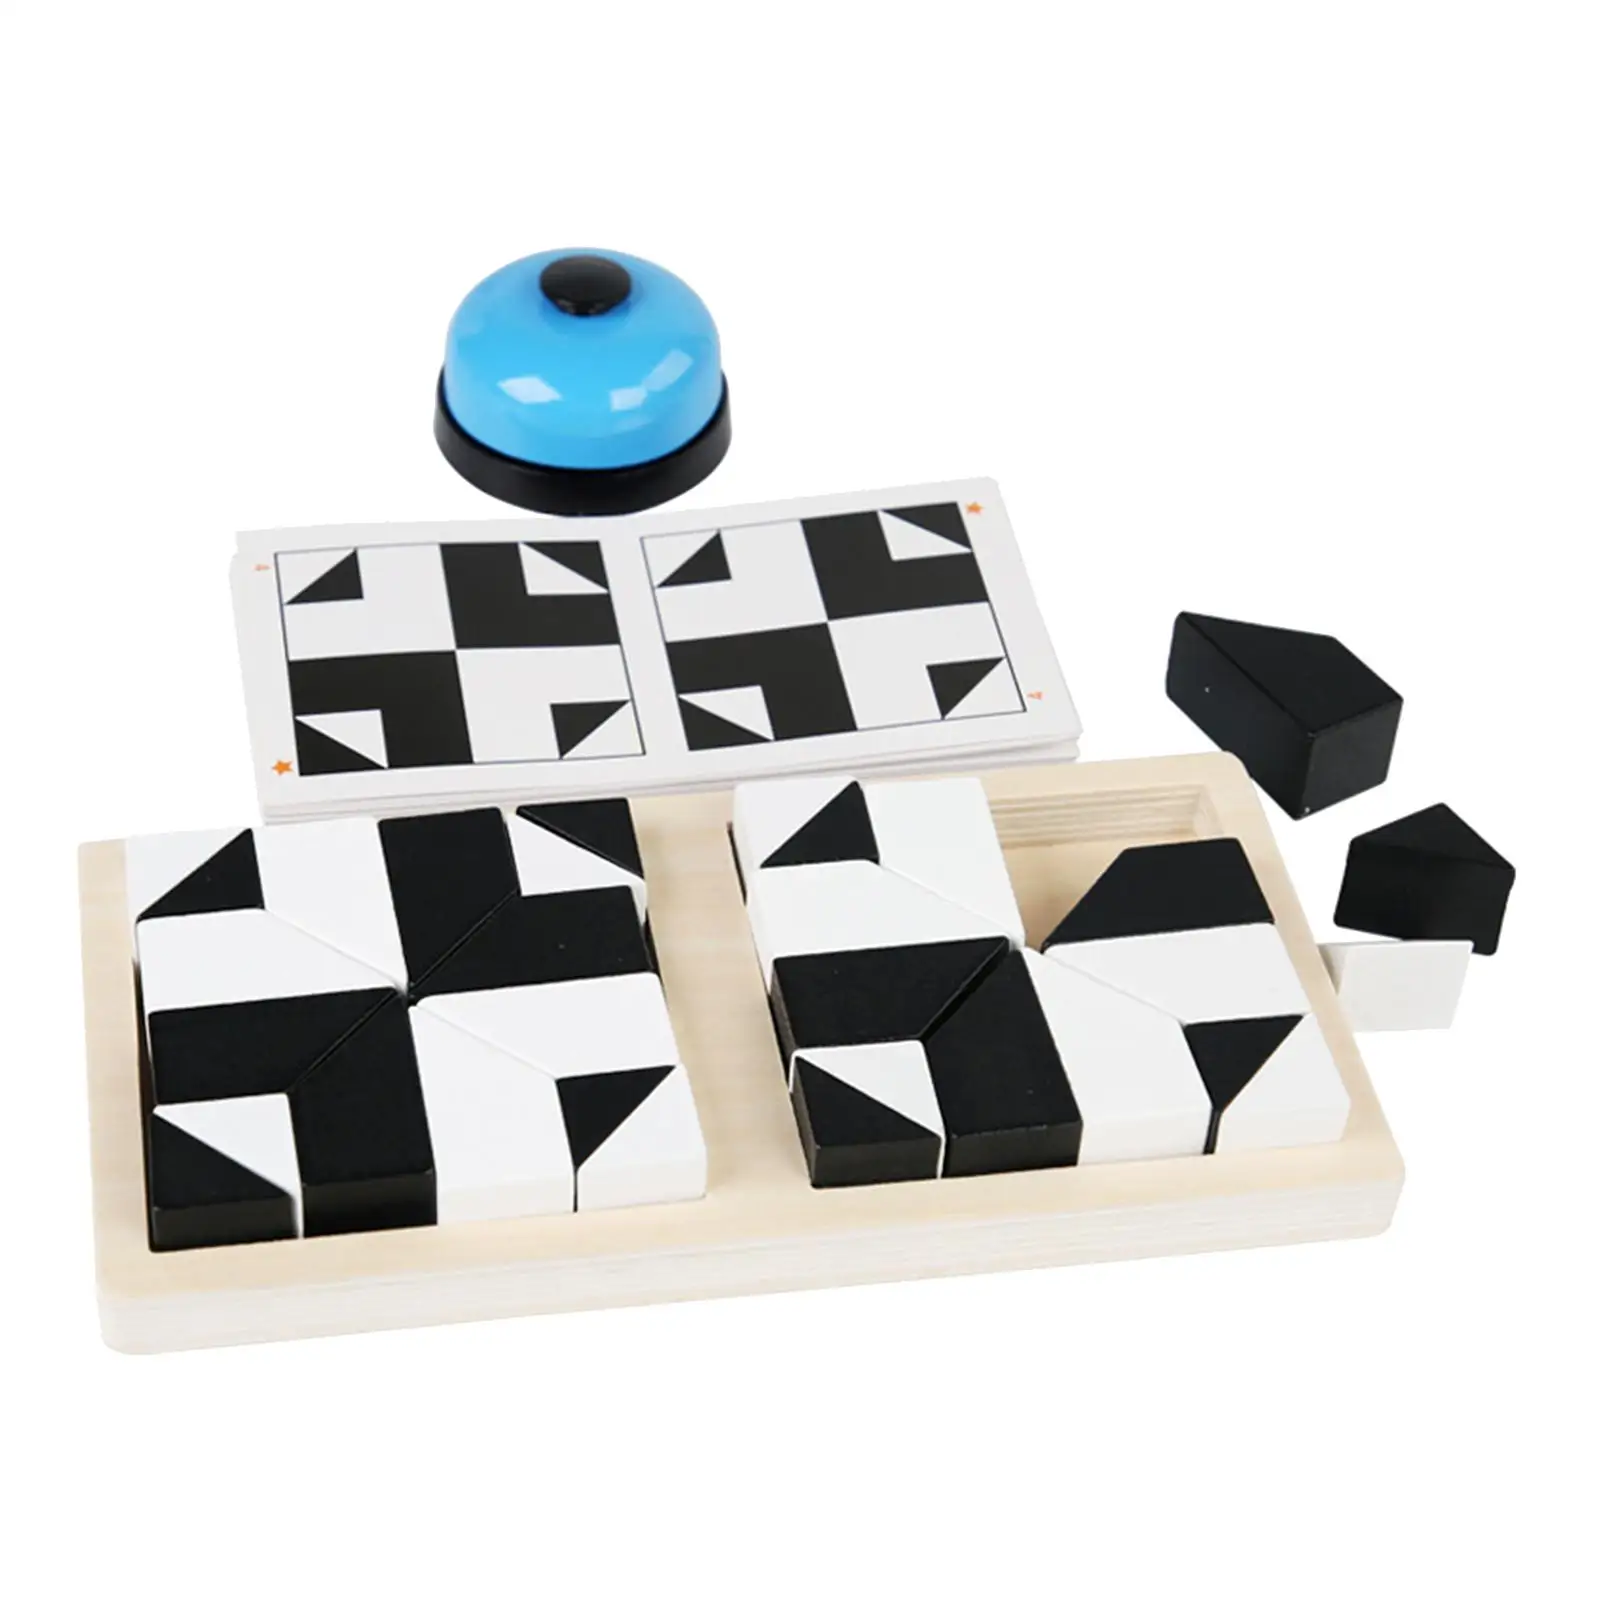 

Wooden Blocks Puzzle Birthday Gifts Stem Geometric Brain Teaser Montessori Toy IQ Game for Boy Ages 4-8 Children Preschool Kids